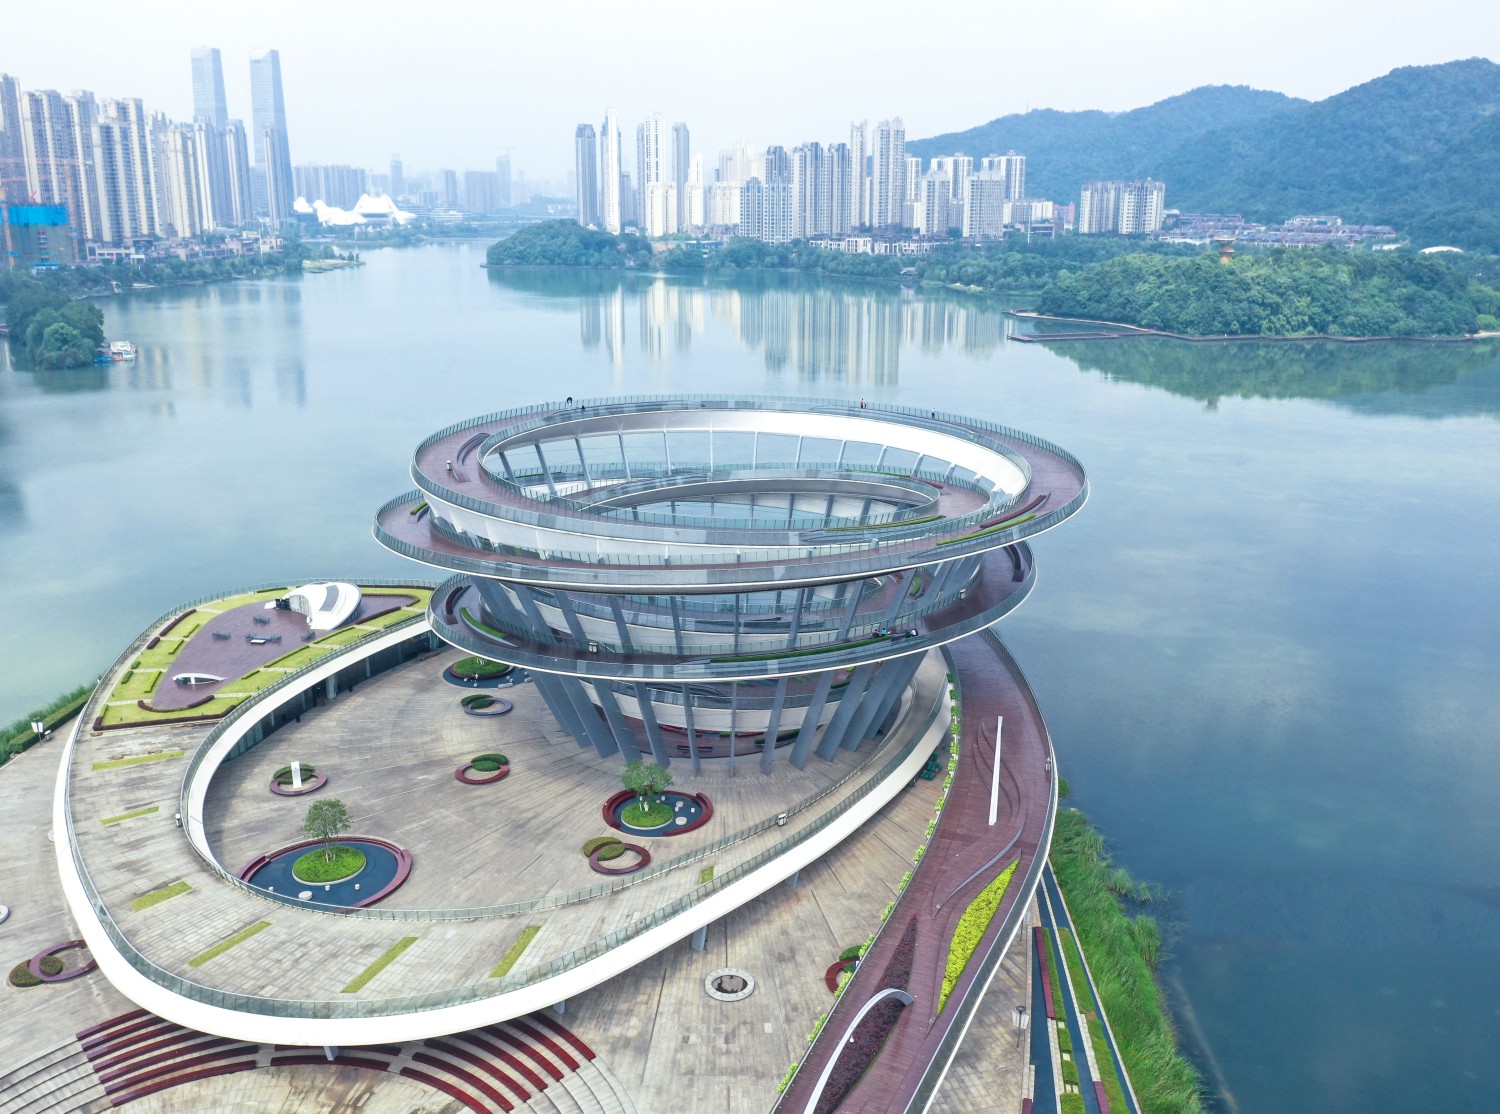 Changsha Meixi Lake International New Town Urban Island( 2020 National Quality Engineering Project)